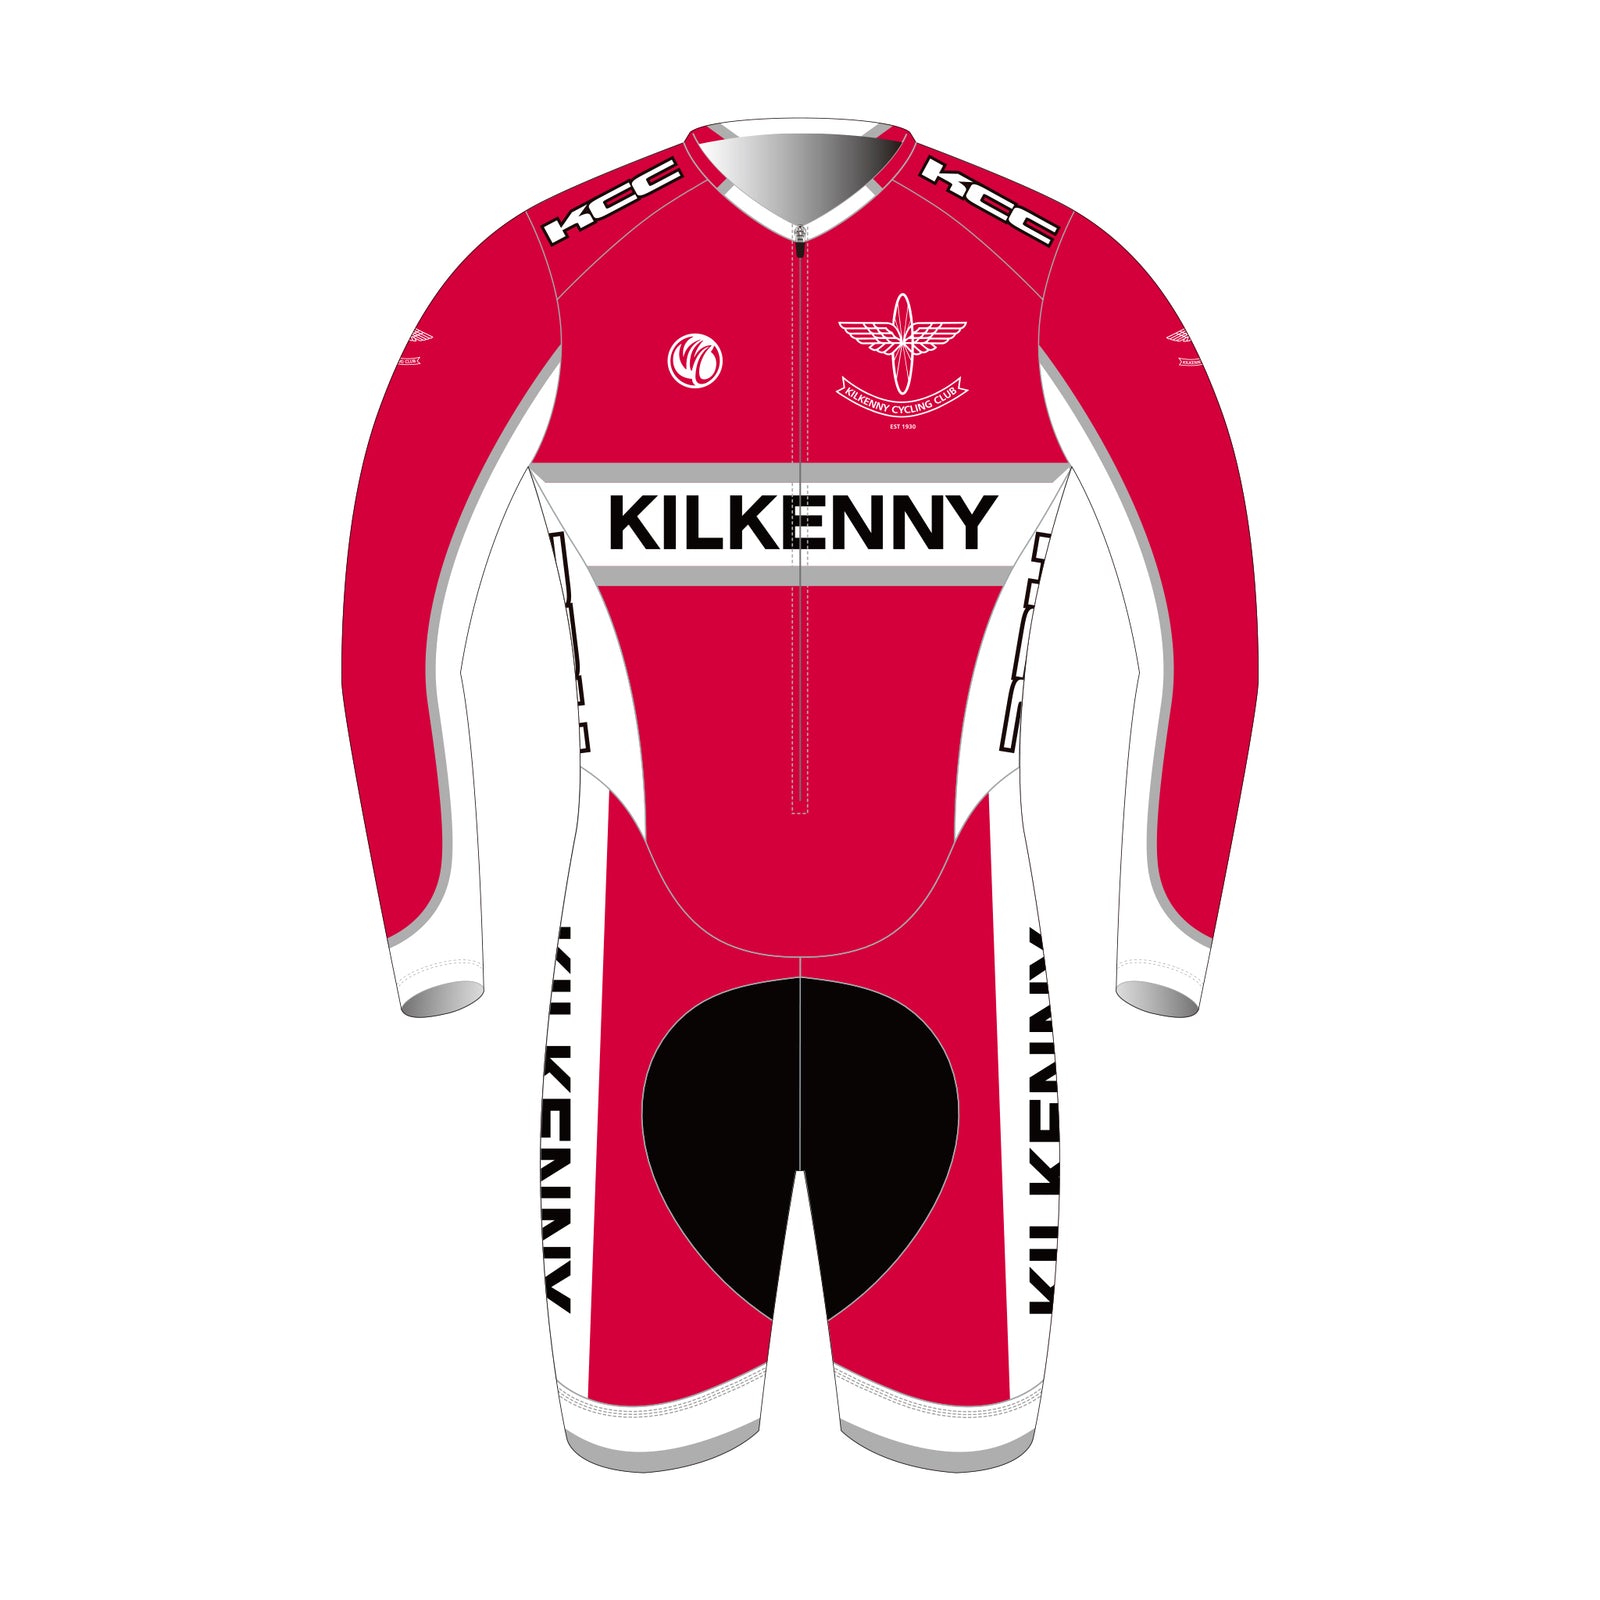 Kilkenny PRO Cycling LS Skinsuit